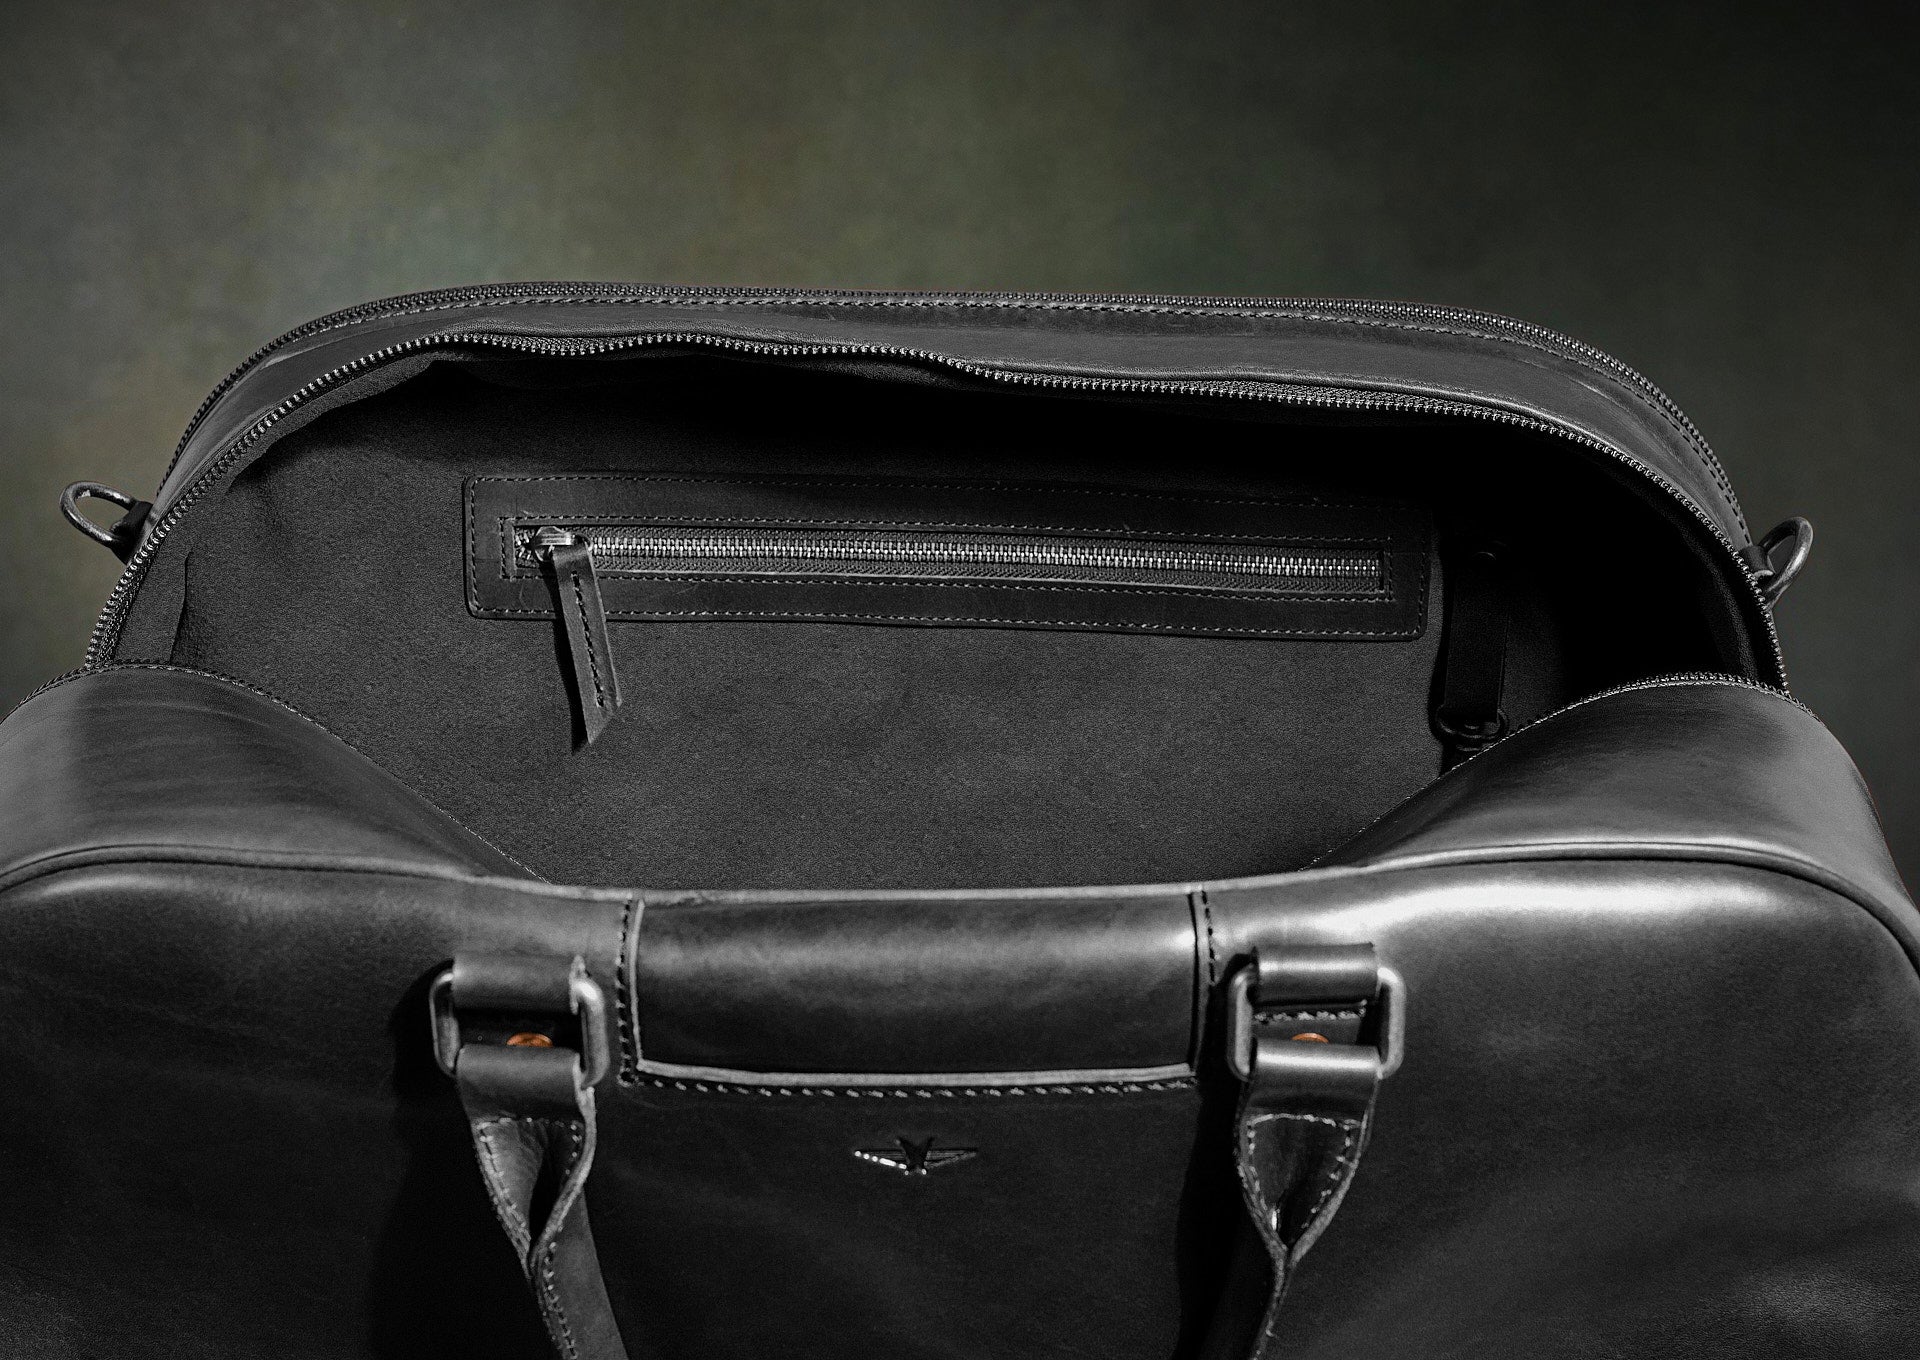 Leather Duffle Bag - Men's Brown Weekender Bag from Satchel & Page